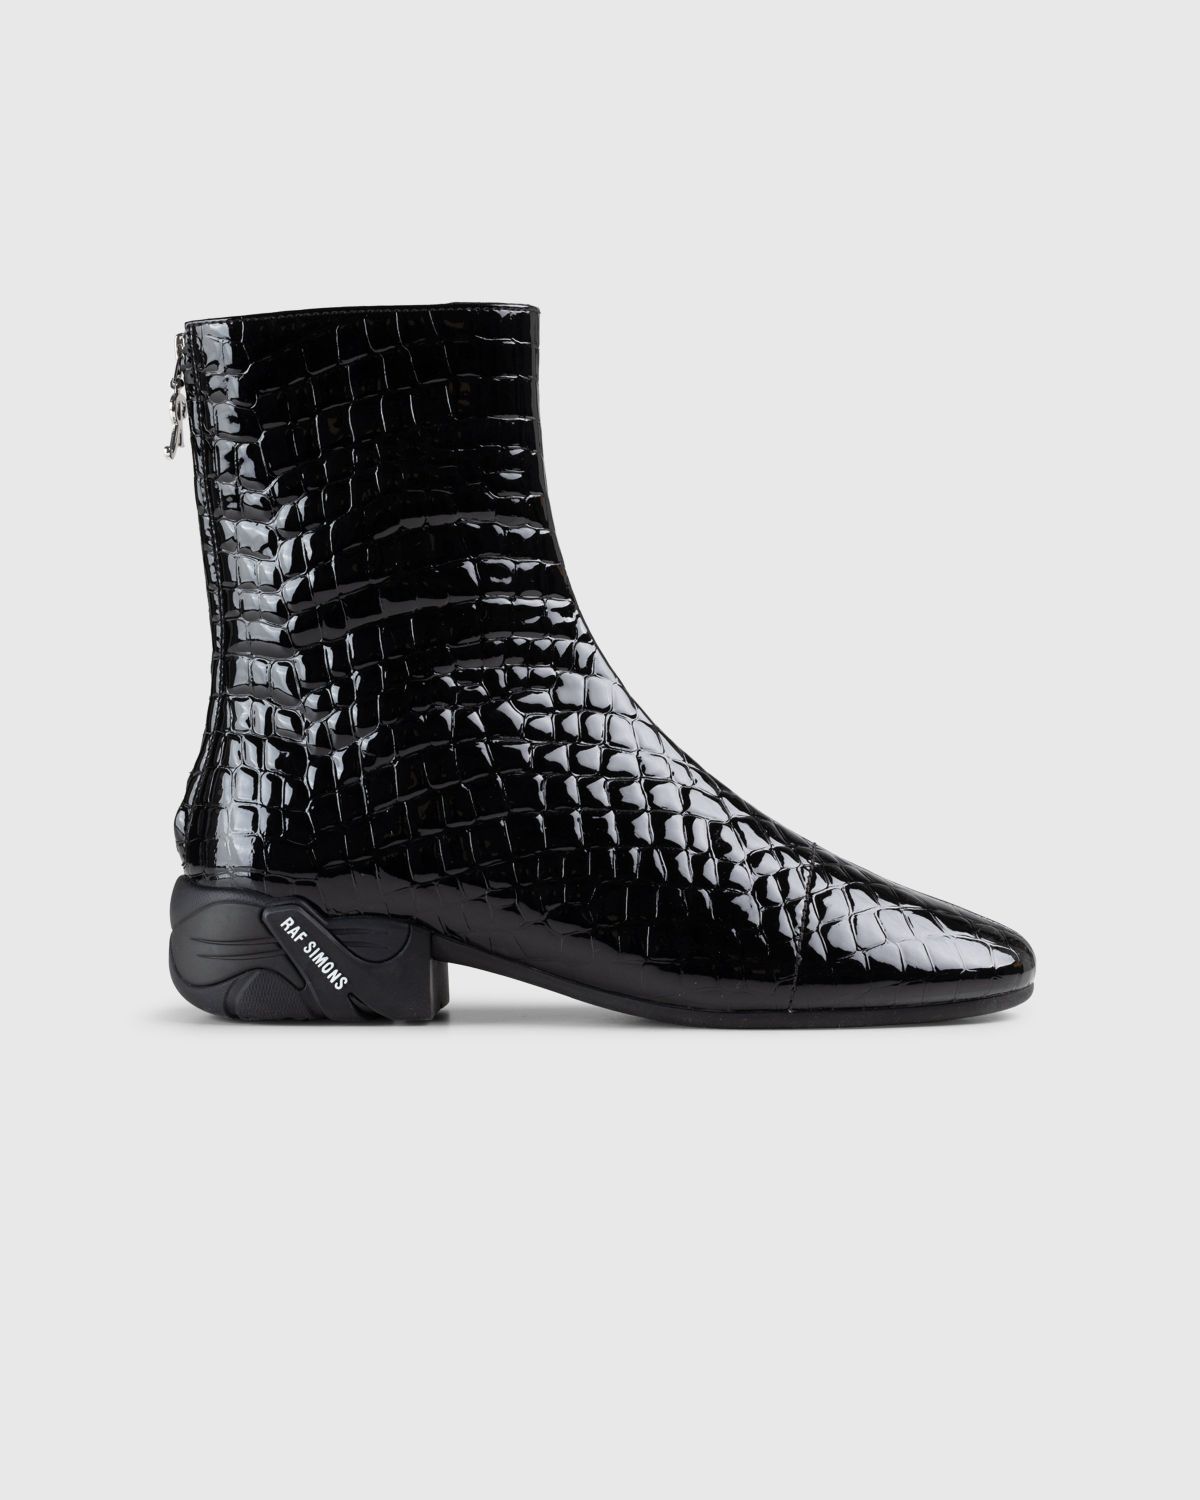 Raf Simons – Solaris High Leather Boot Black Croc - Boots - Black - Image 1